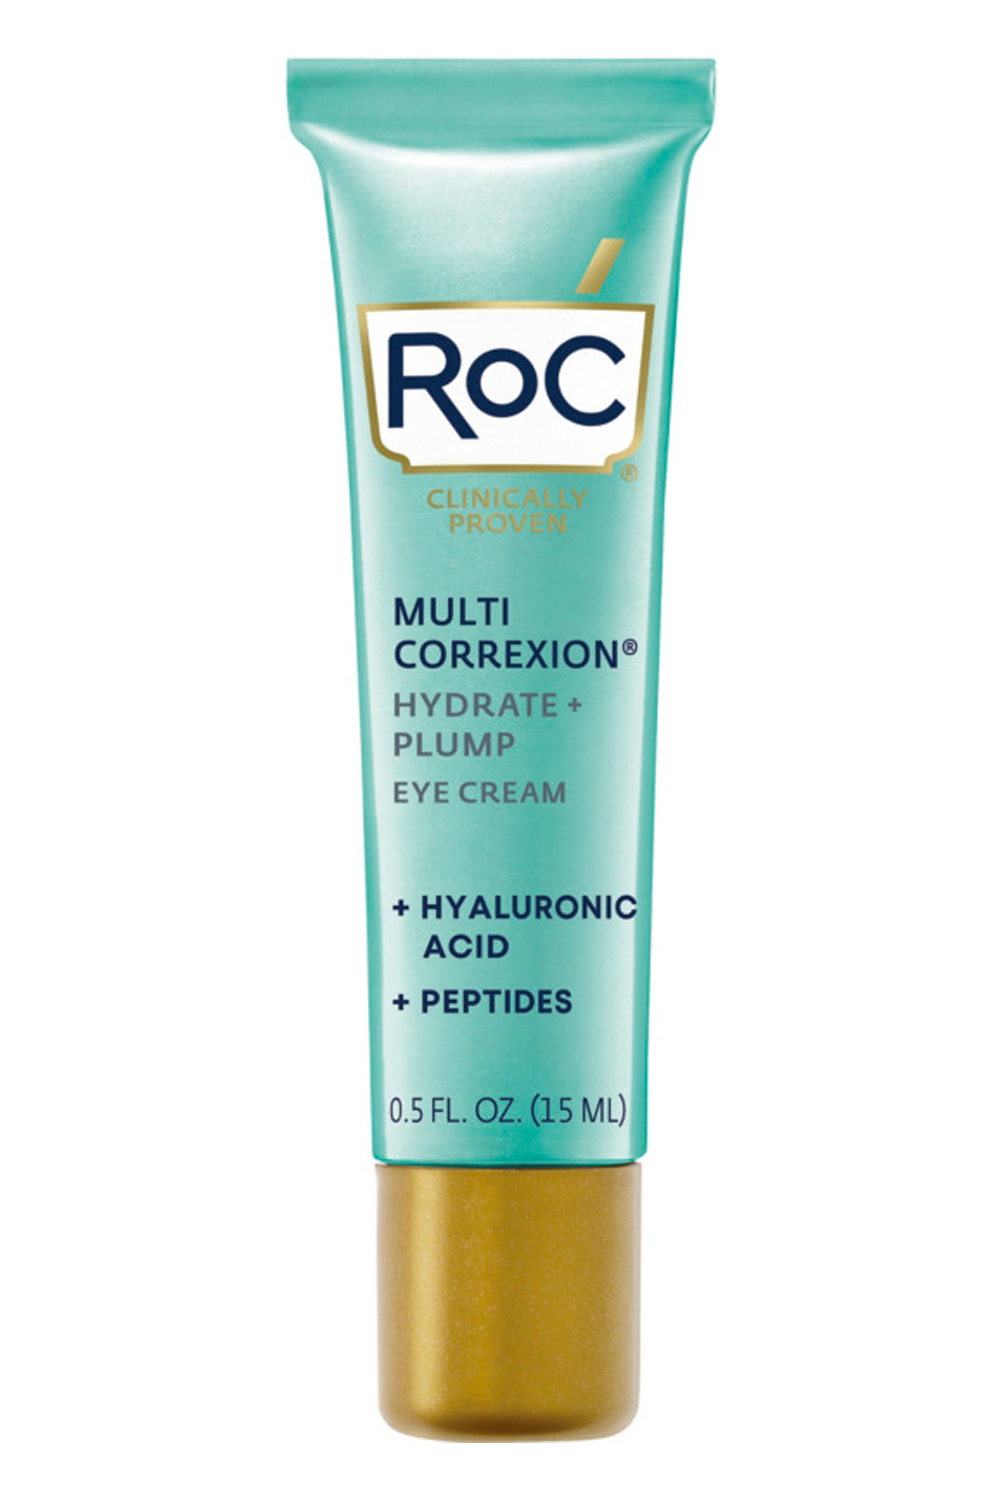 RoC Multi Correxion Hydrate + Plump Eye Cream